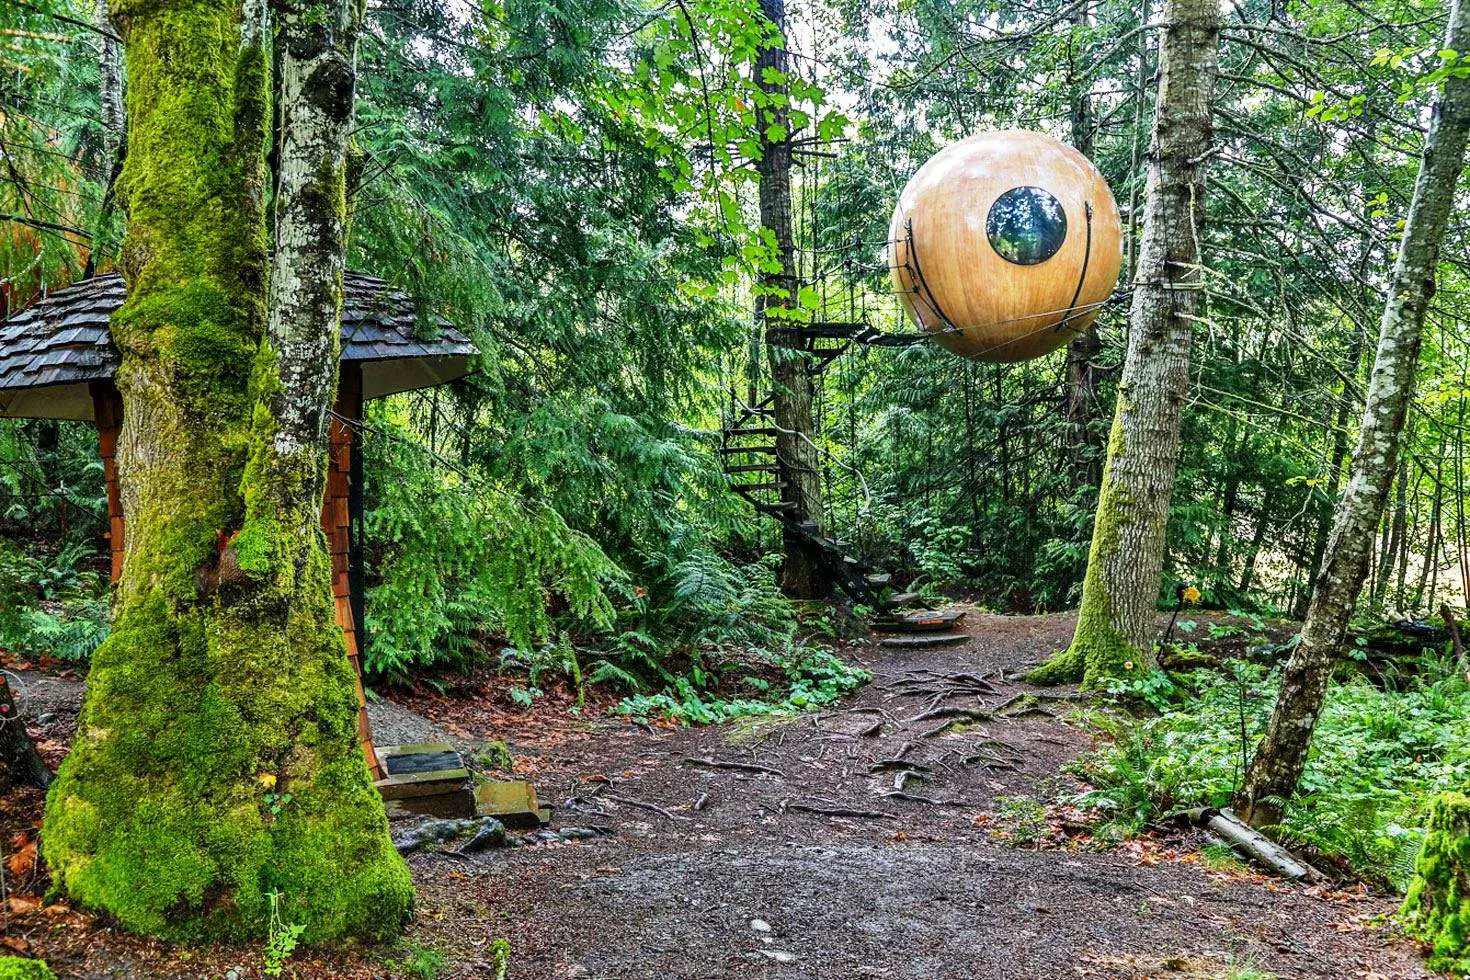 Unique Places To Stay - Free Spirit Spheres, British Columbia, Canada